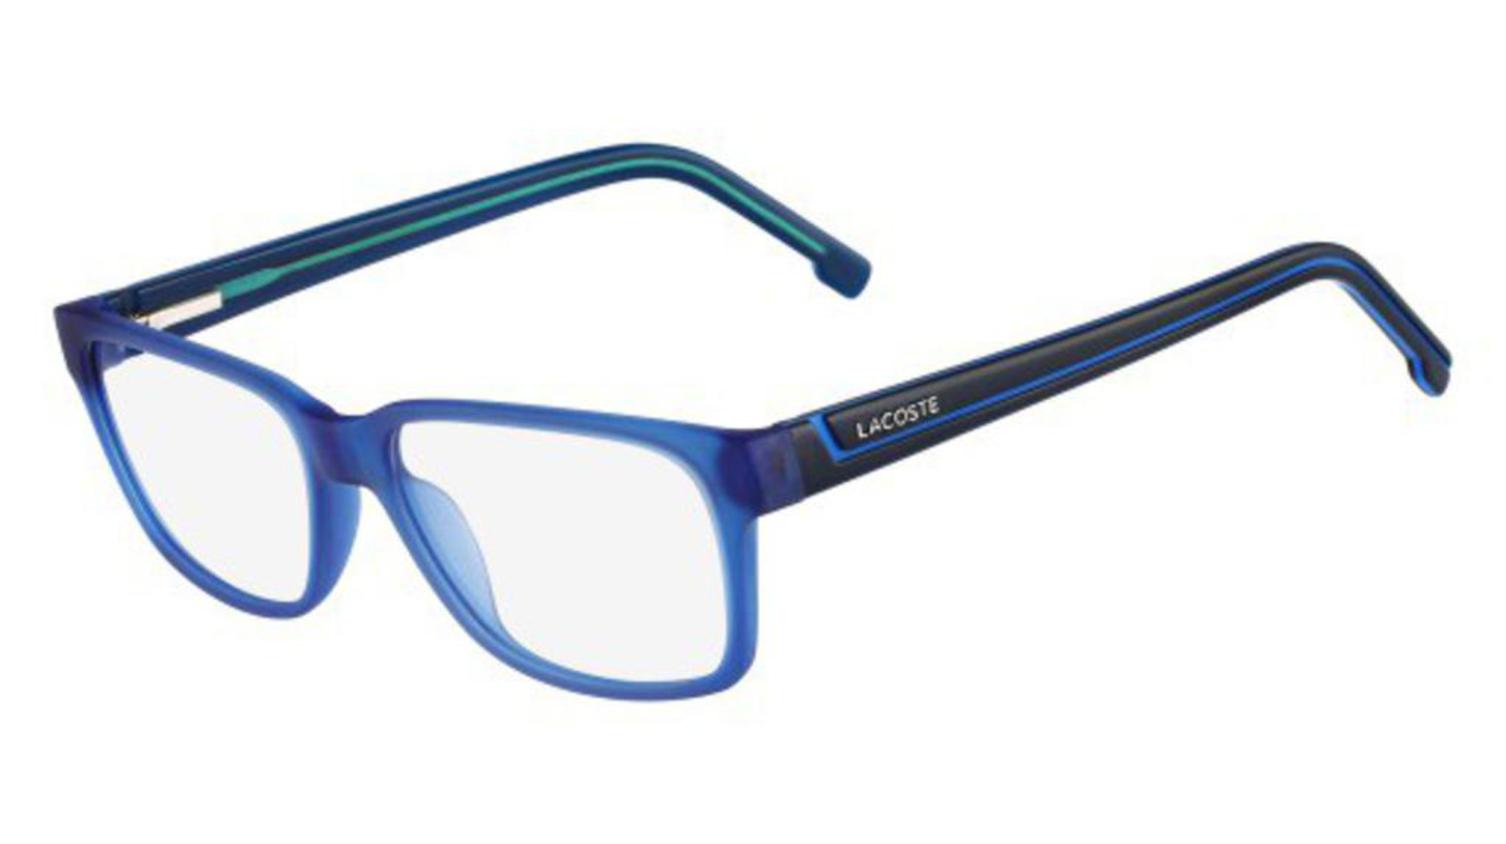 LACOSTE L2692 Eyeglasses all colors: 001, 214, 424, 615, 800, 002 